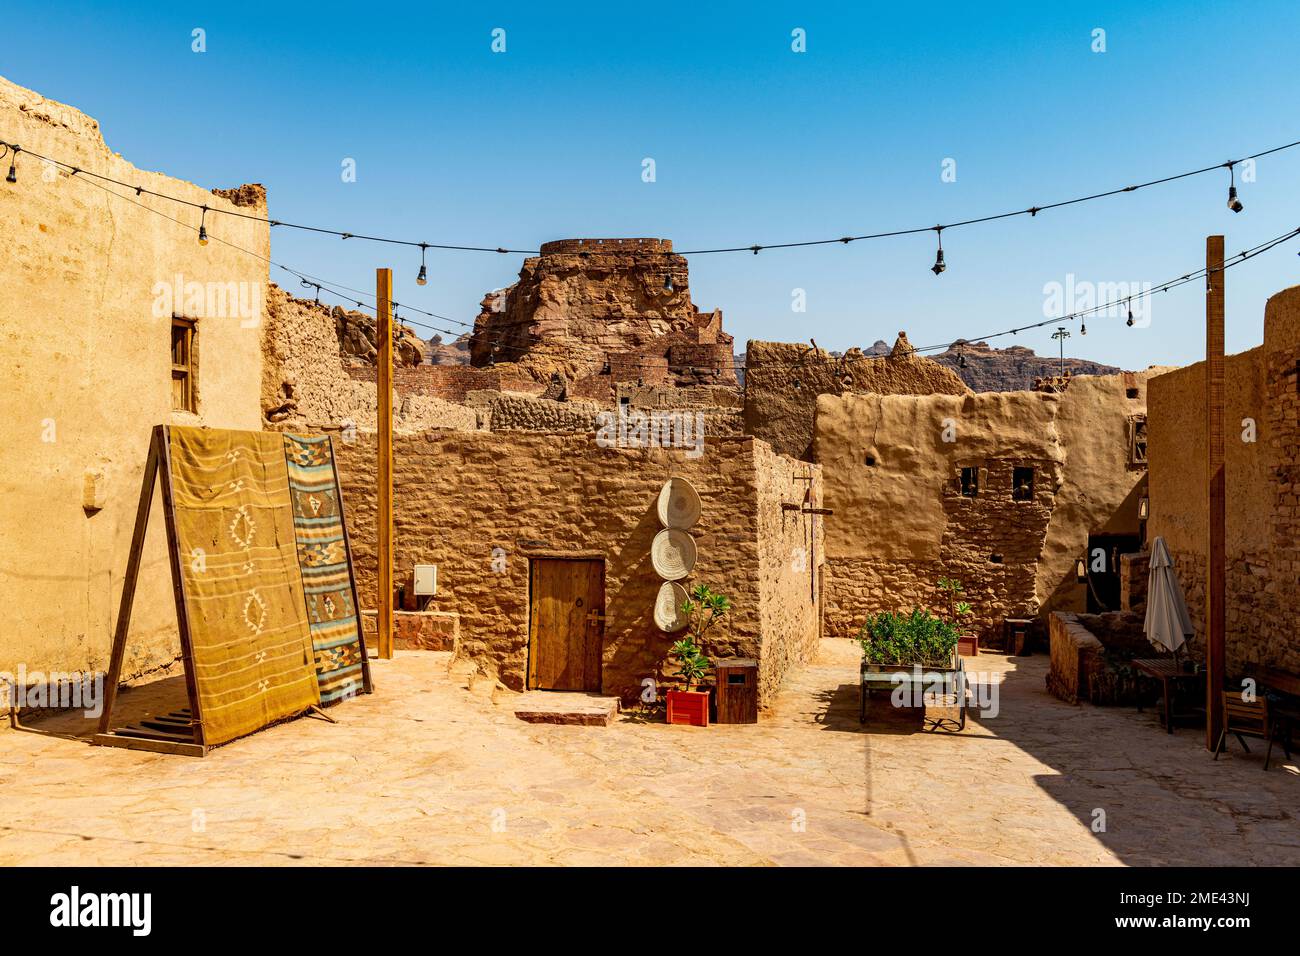 Saudi Arabia, Al-Ula, String lights hanging between mud houses in desert old town Stock Photo